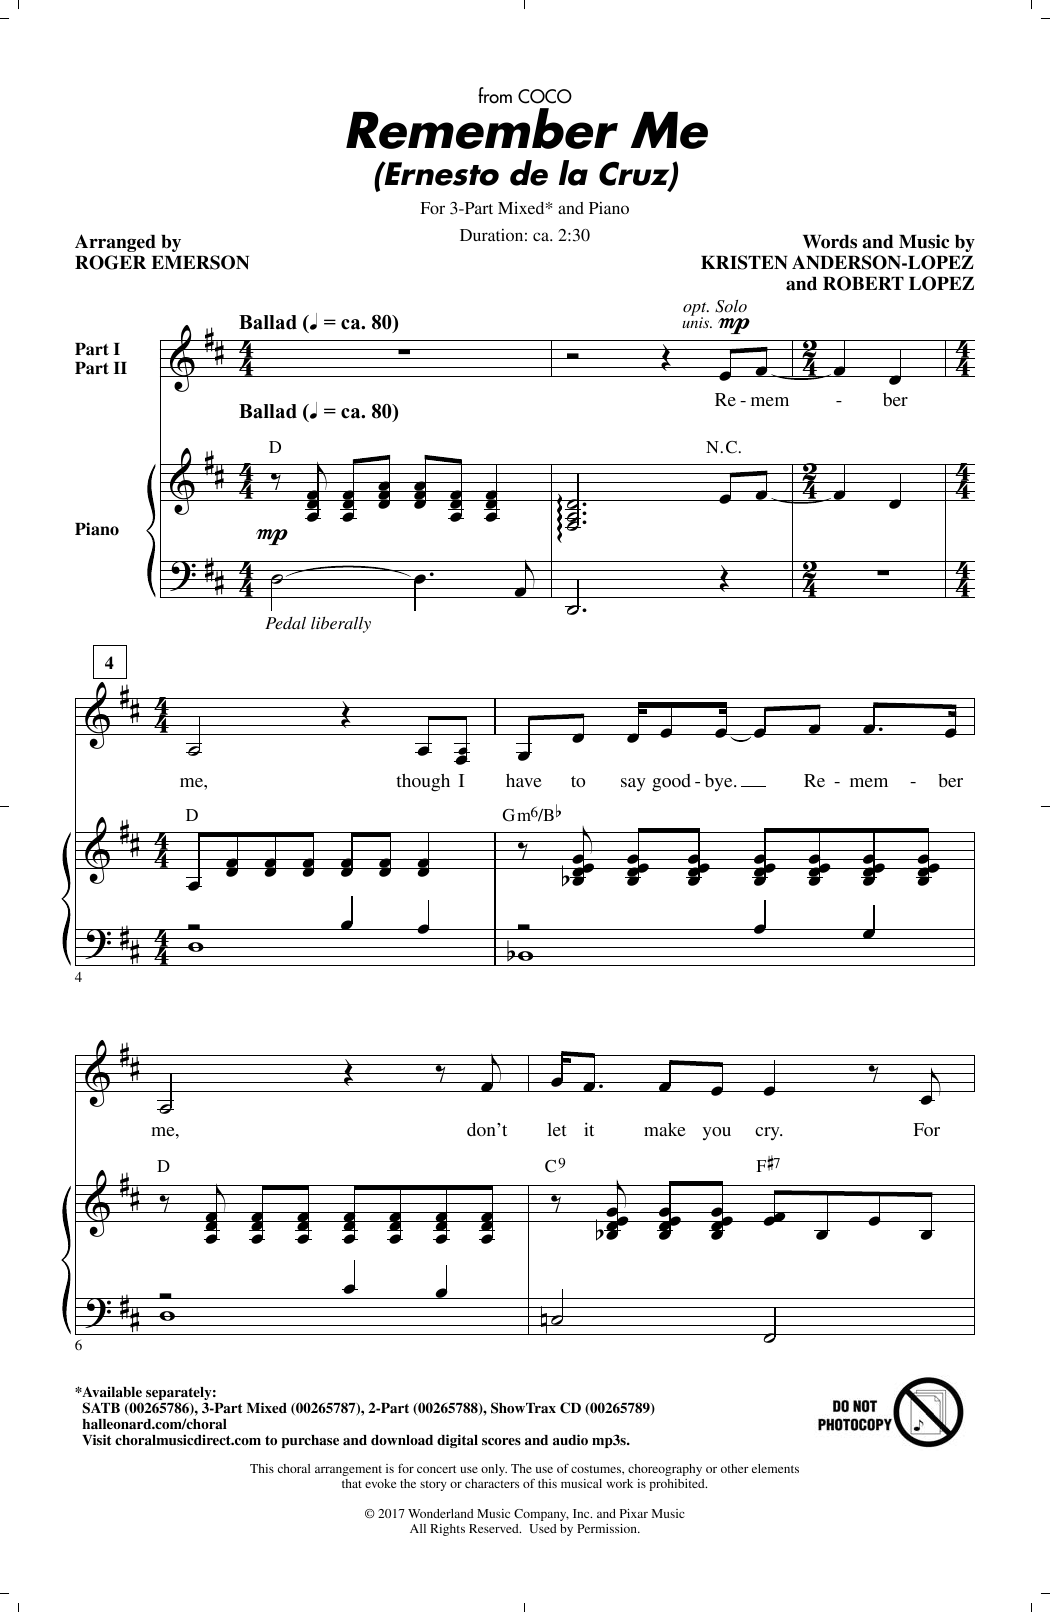 Kristen Anderson-Lopez & Robert Lopez Remember Me (Ernesto de la Cruz) (from Coco) (arr. Roger Emerson) sheet music notes and chords arranged for 3-Part Mixed Choir